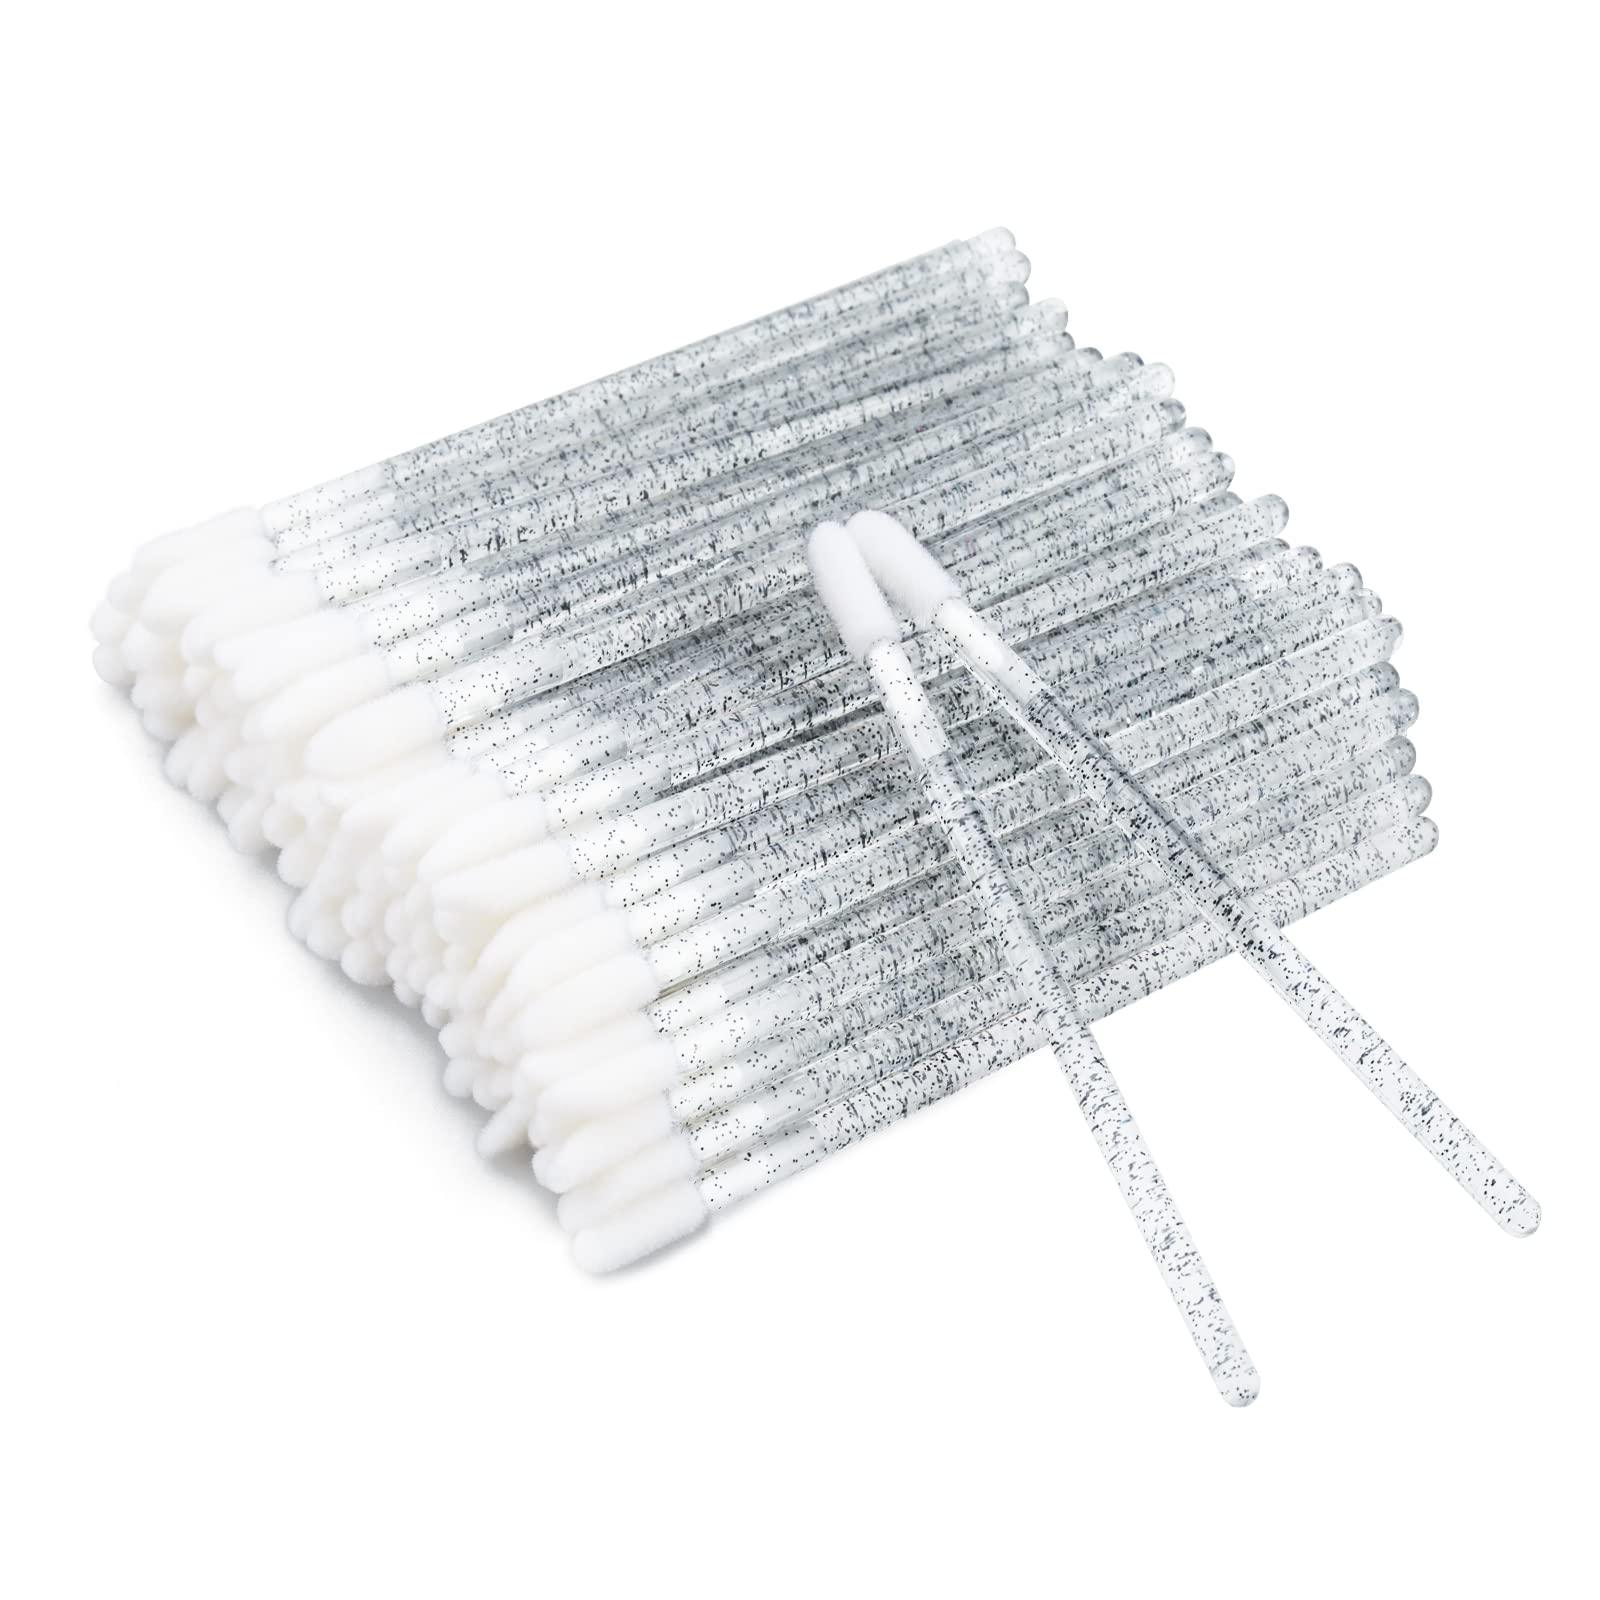 COOSEON® 100PCS Disposable Lip Brushes Sets - COOSEON